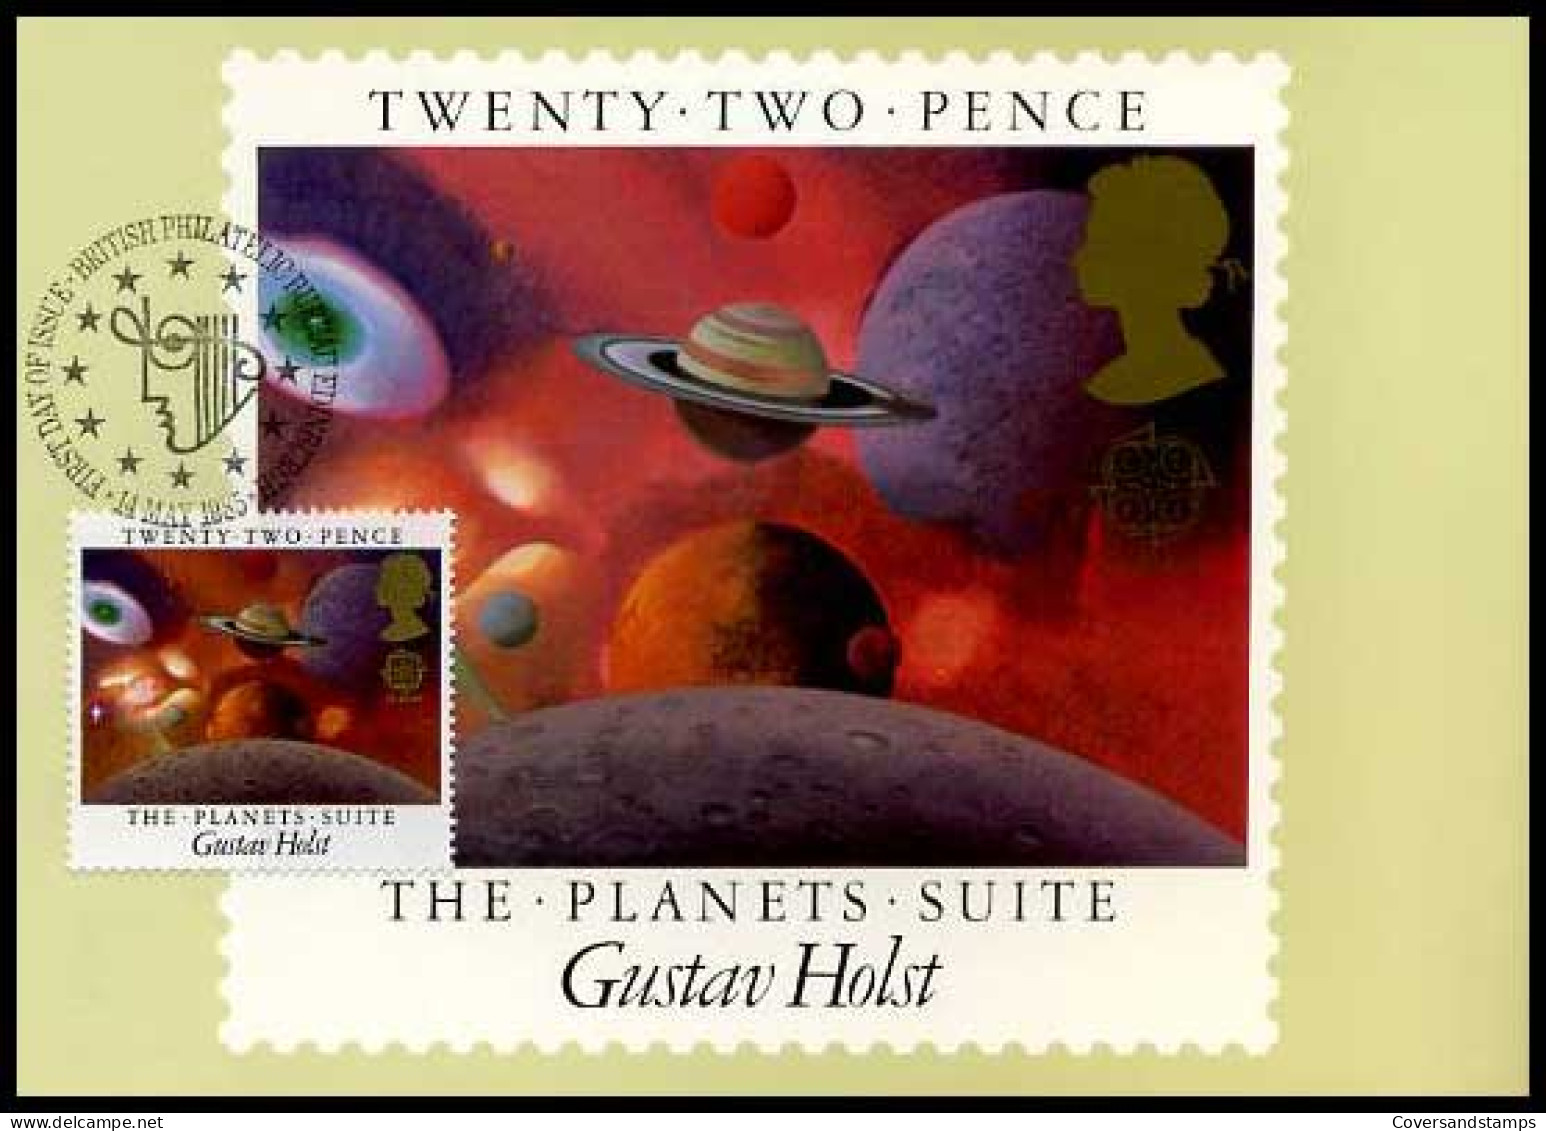 Groot-Brittannië - MK - The Planets Suite : Gustav Holst                               - Maximumkaarten